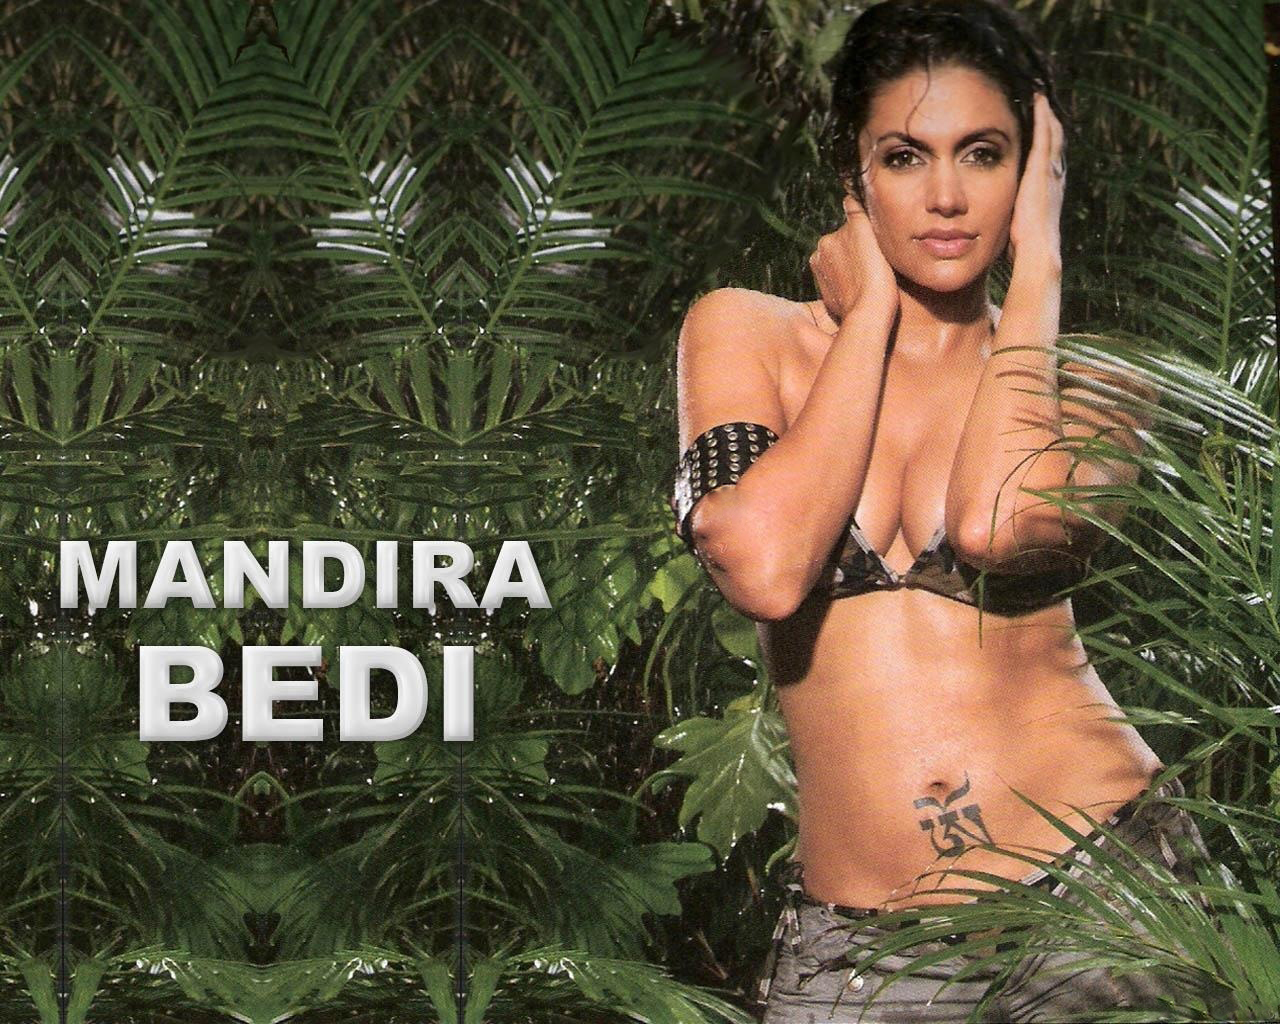 Mandira Bedi hot and smokey wallpaper